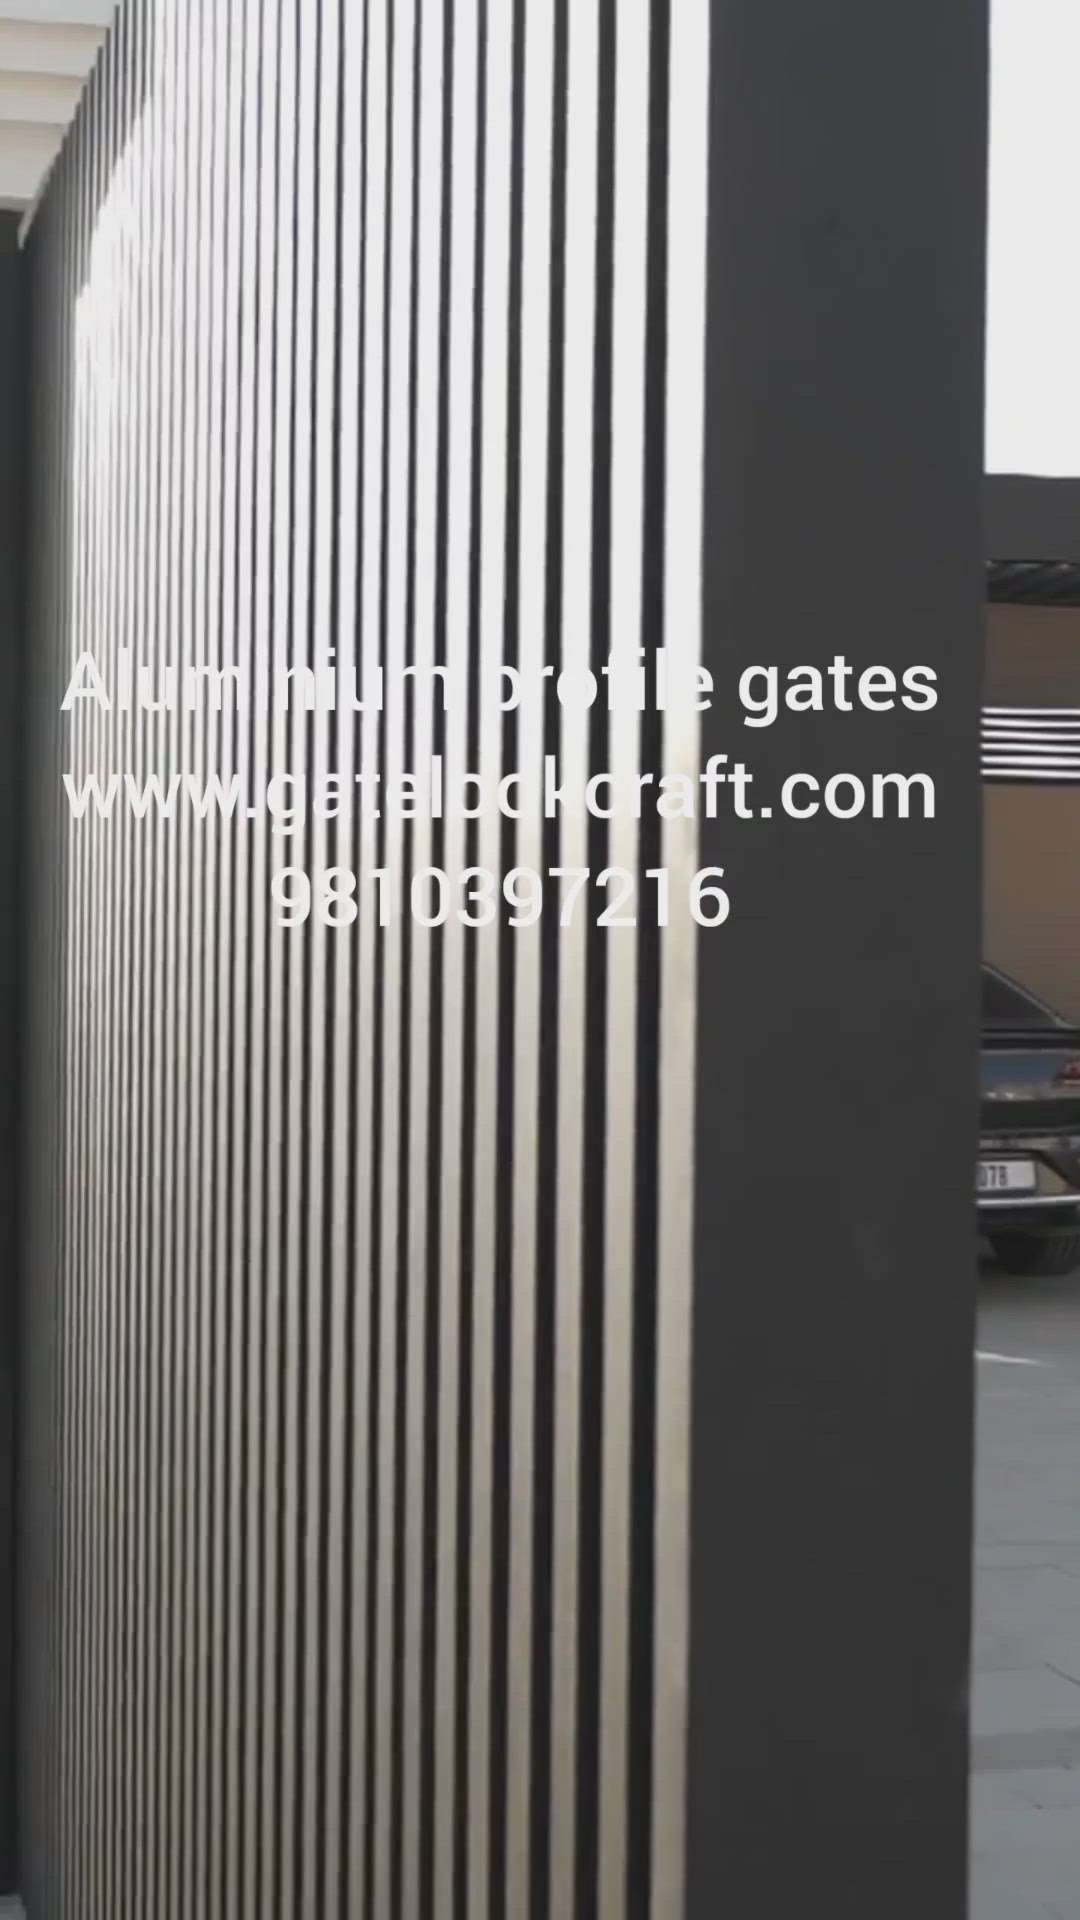 Aluminium profile gates by Hibza sterling interiors pvt #gatelookcraft #aluminiumprofilegates #aluminiumclading #aluminiumpanelgates #aluminiumprofile #maingates #slidinggates #fancygate